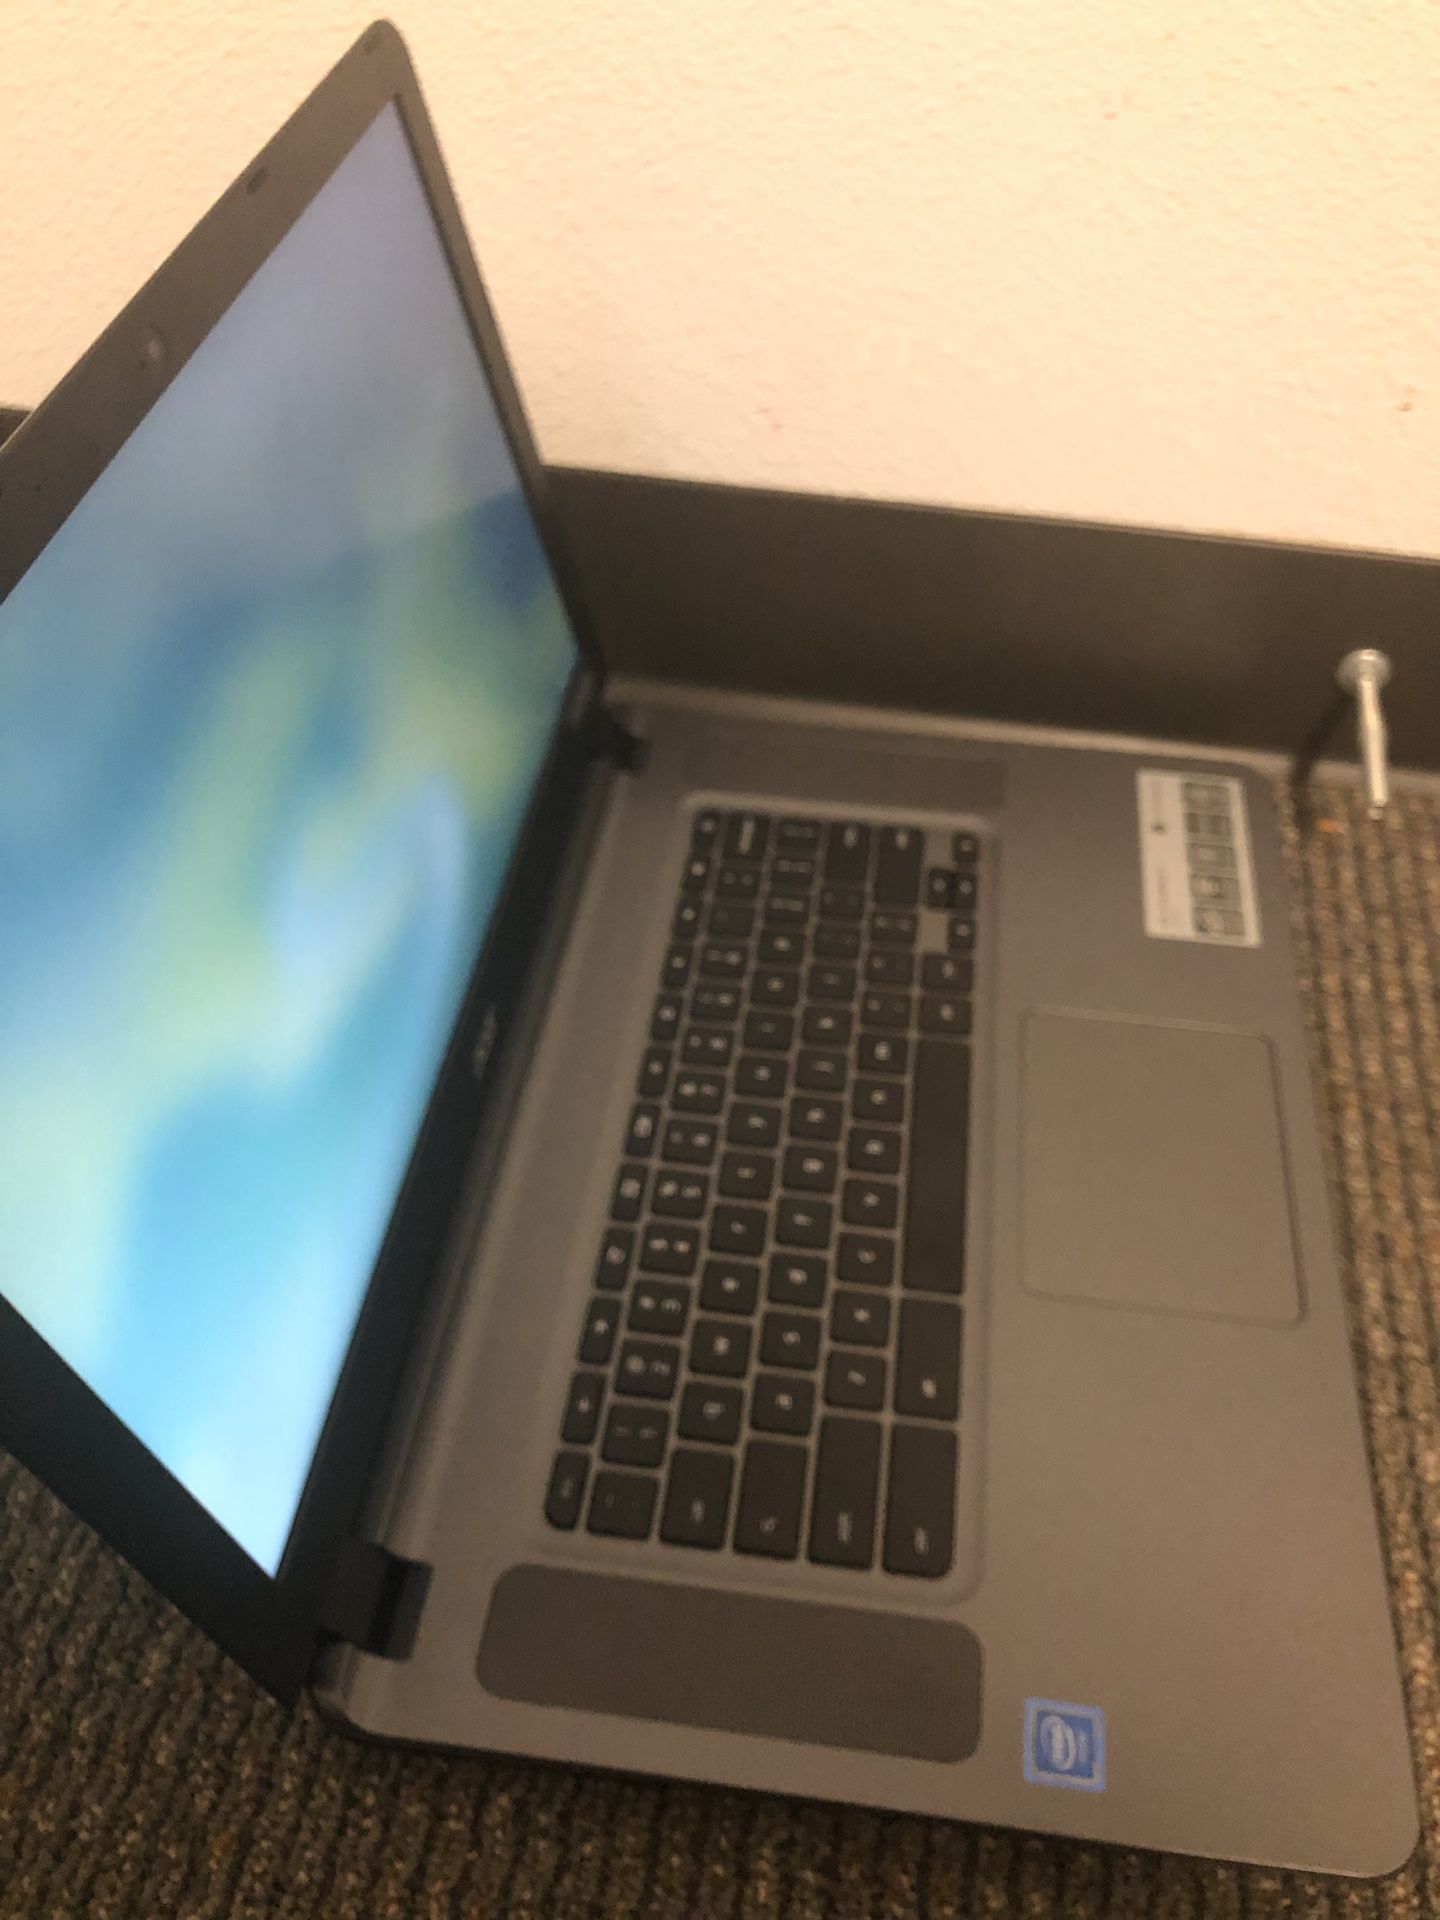 Laptop Chromebook